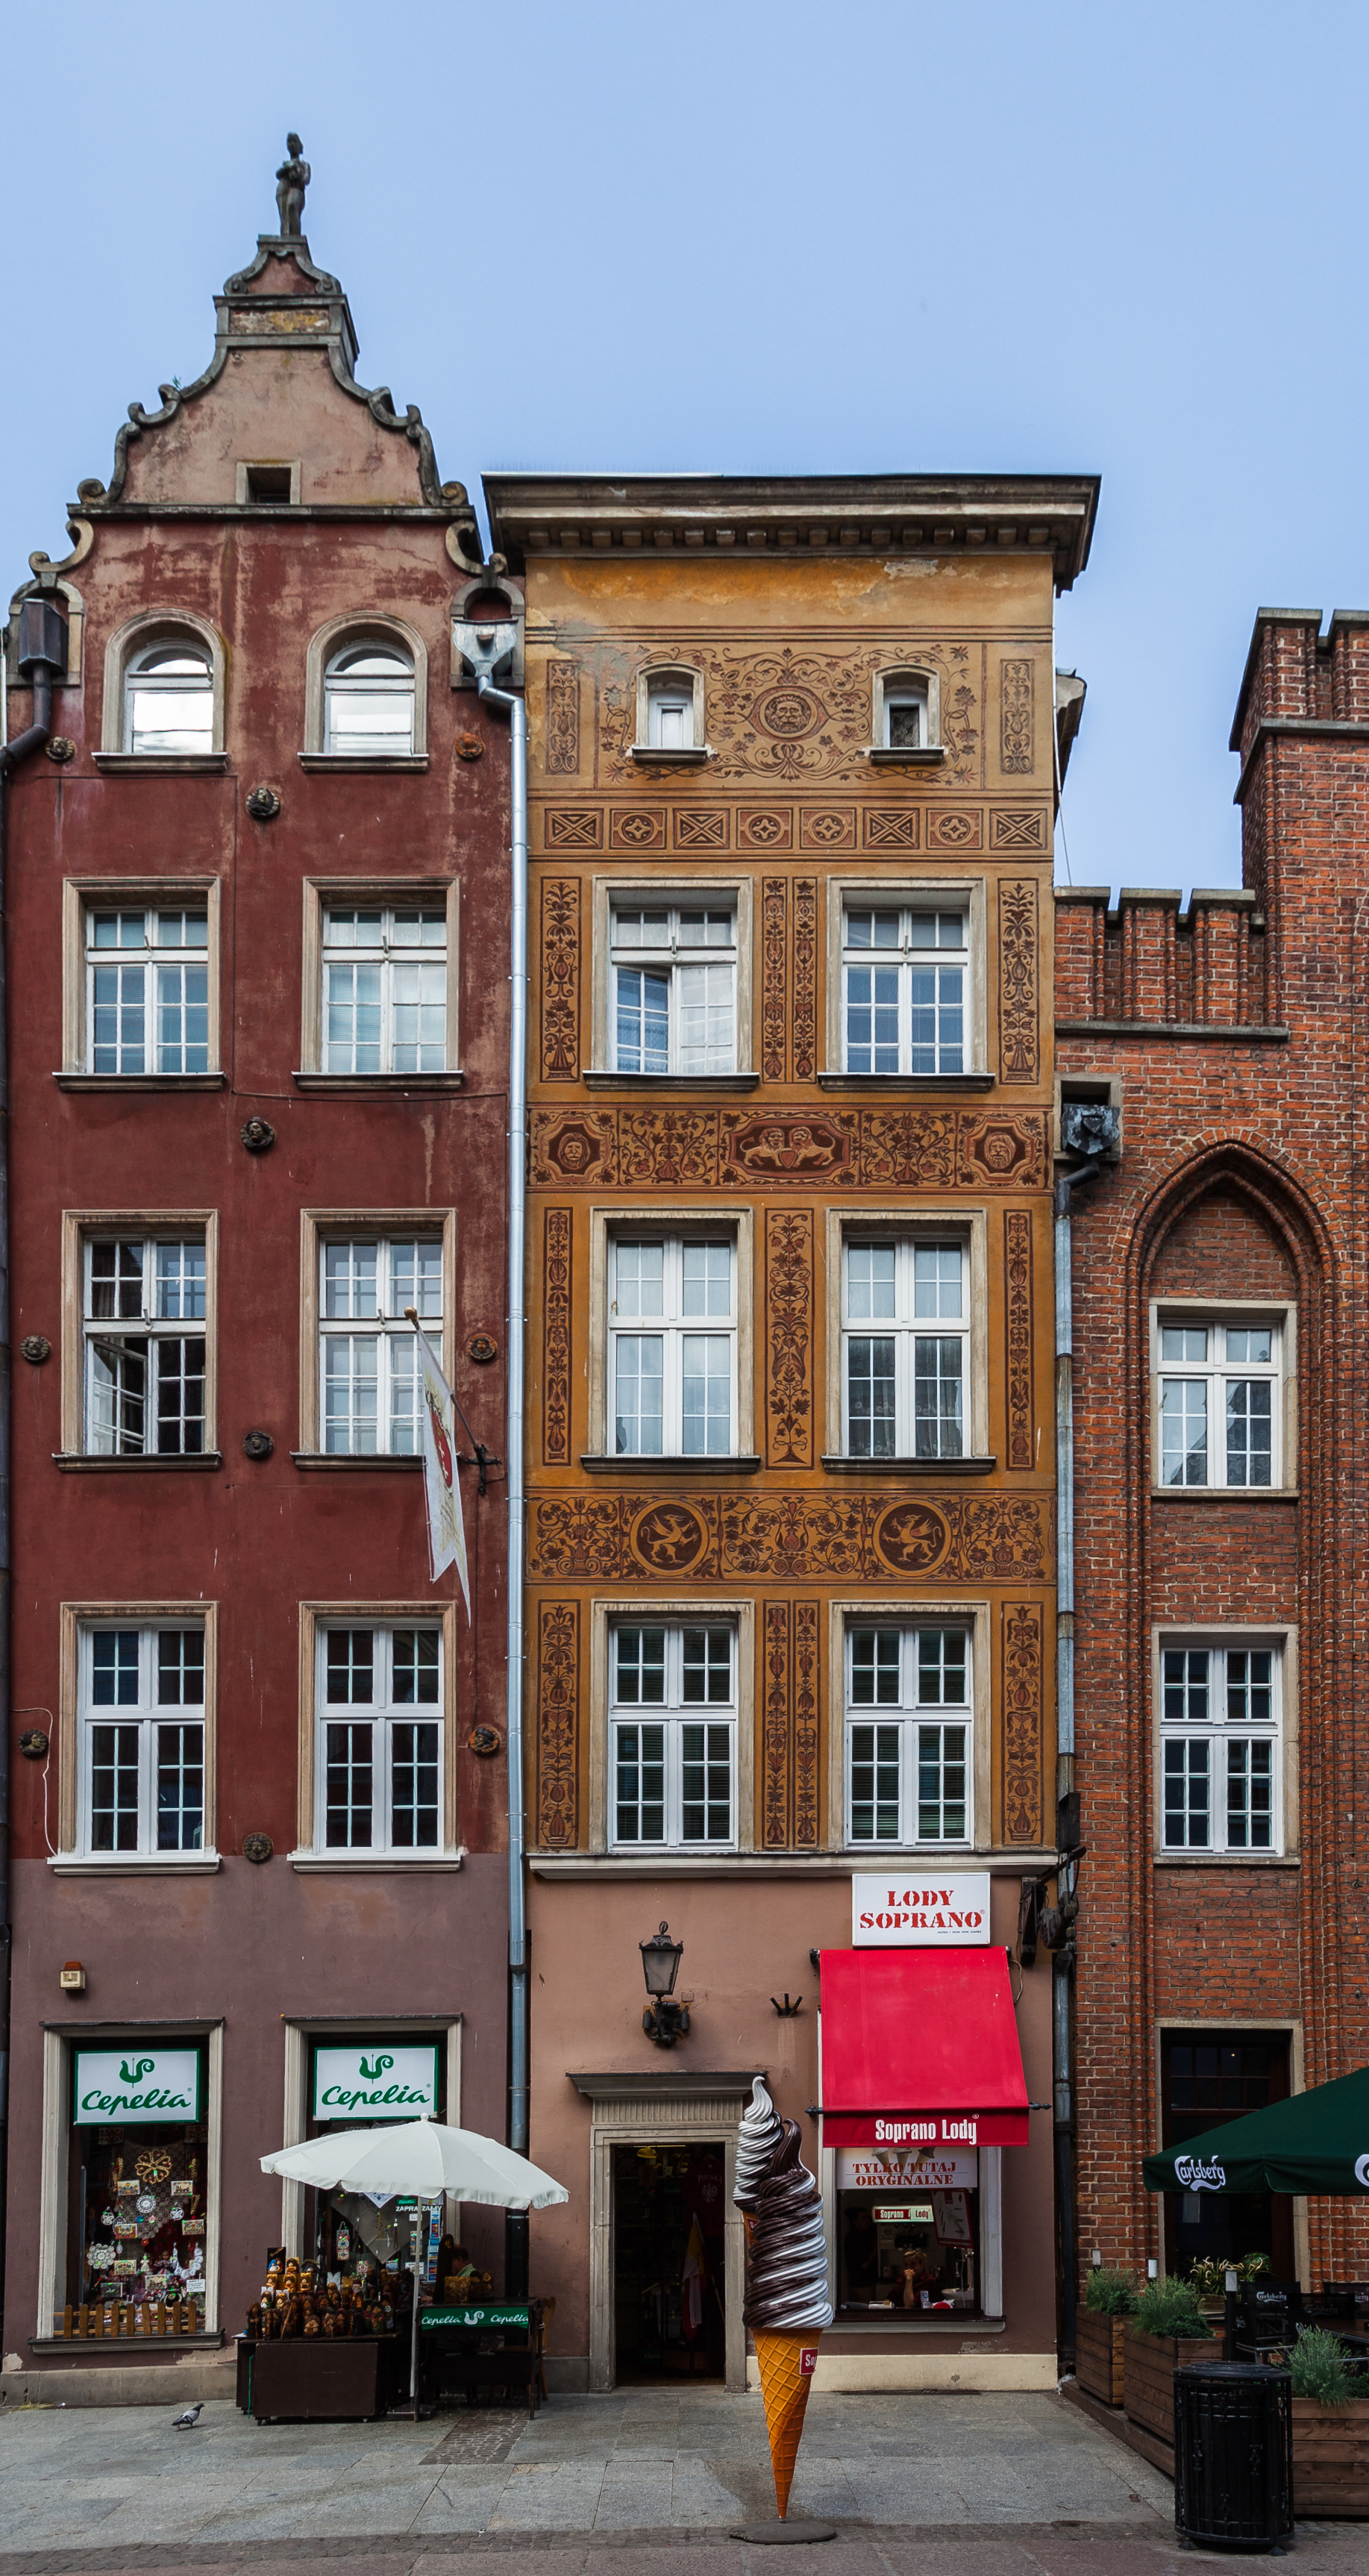 Edificio en Dluga 49, Gdansk, Polonia, 2013-05-20, DD 01